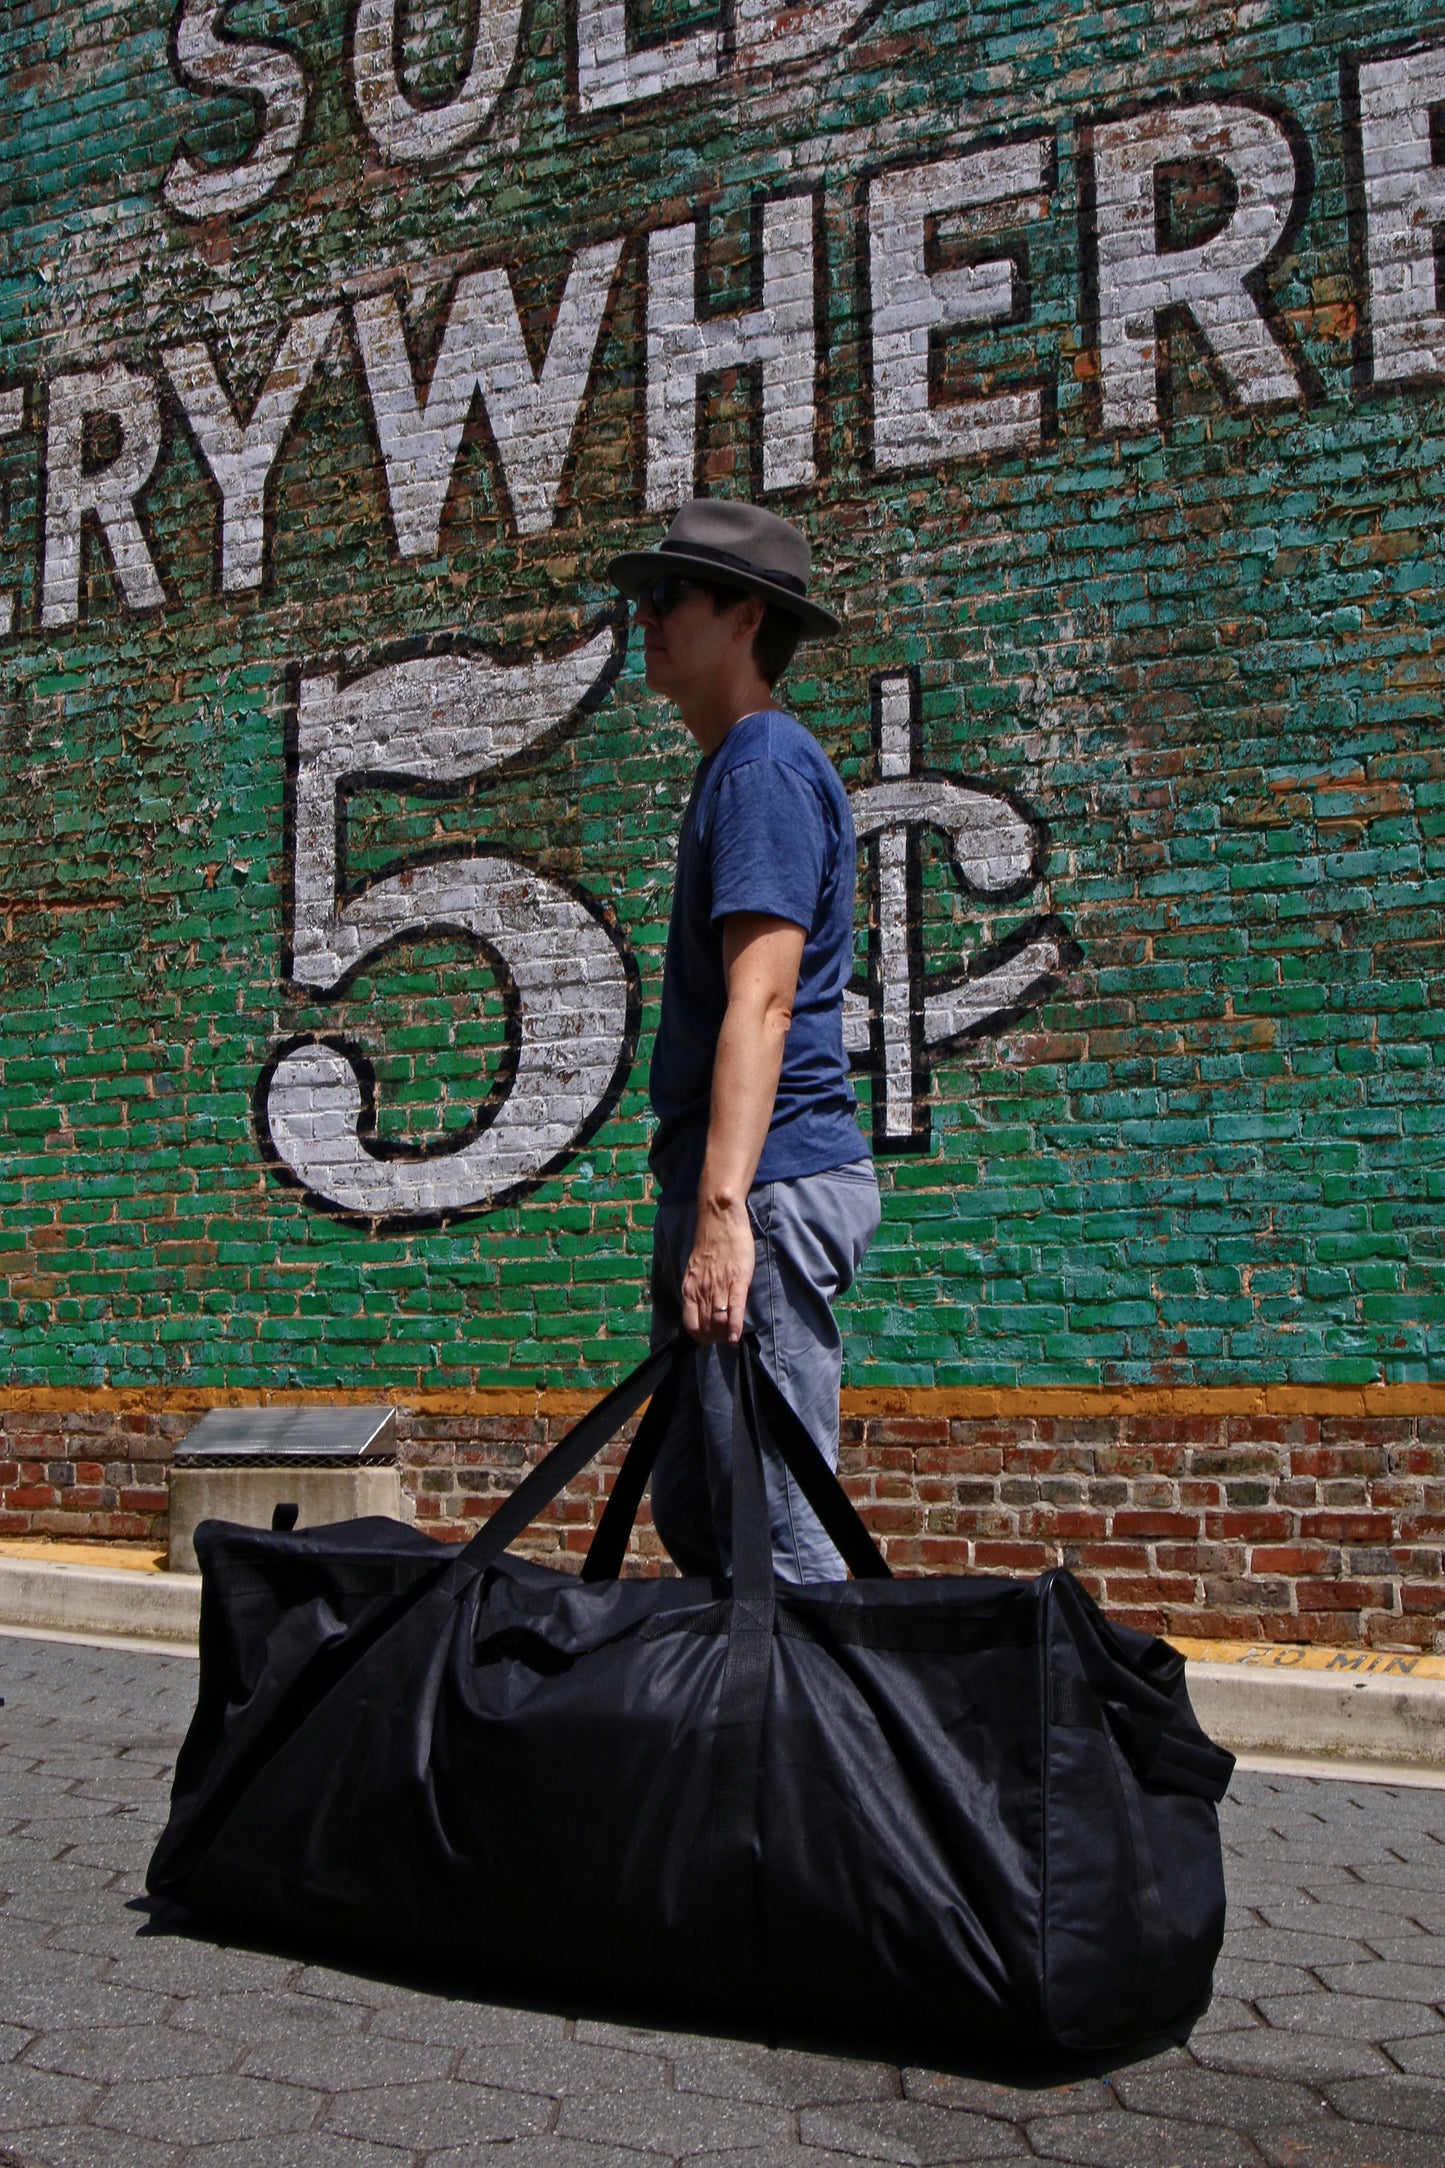 Gothamite 50-inch Duffel Bag Cargo Travel Oversize Hockey Sports Duffle, Black, XL